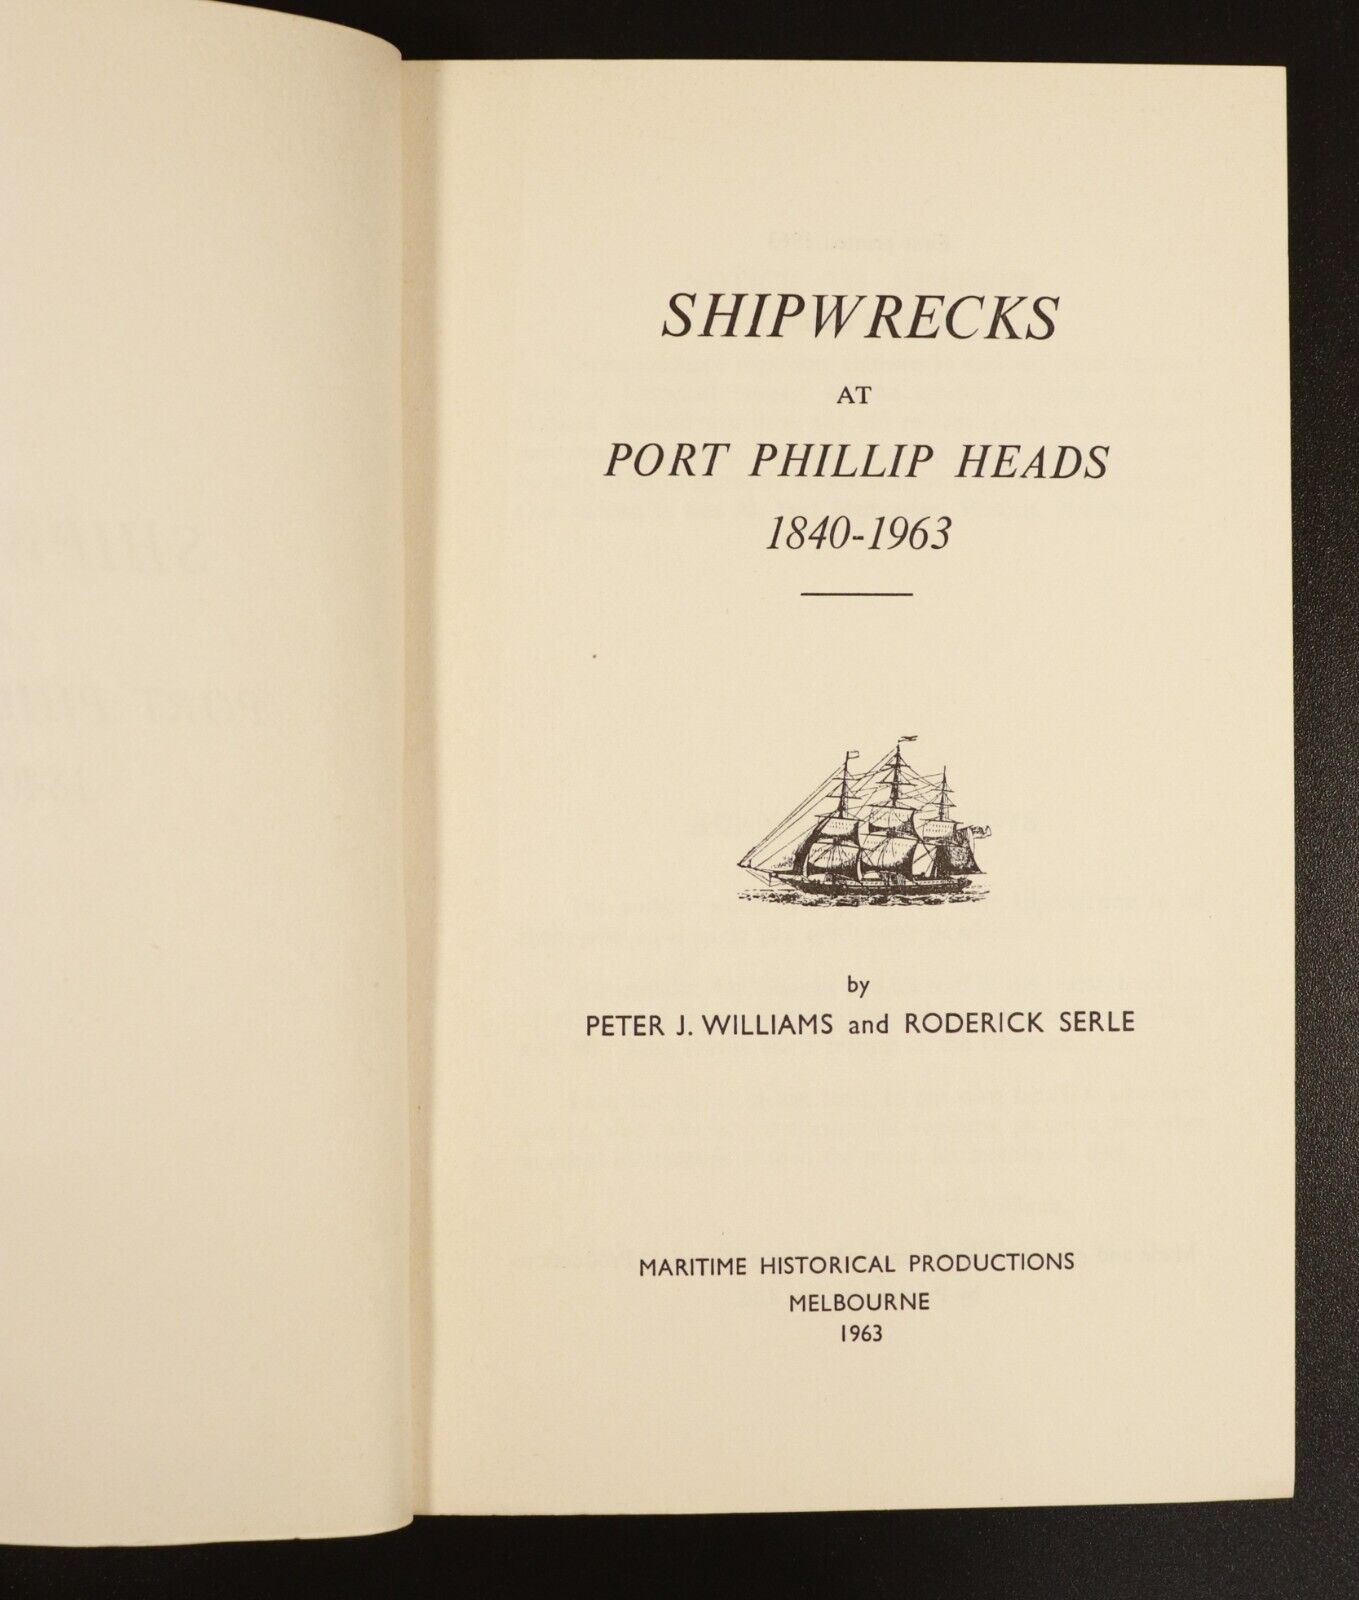 1963 Shipwrecks At Port Phillip Heads Australian Maritime History Book - 0